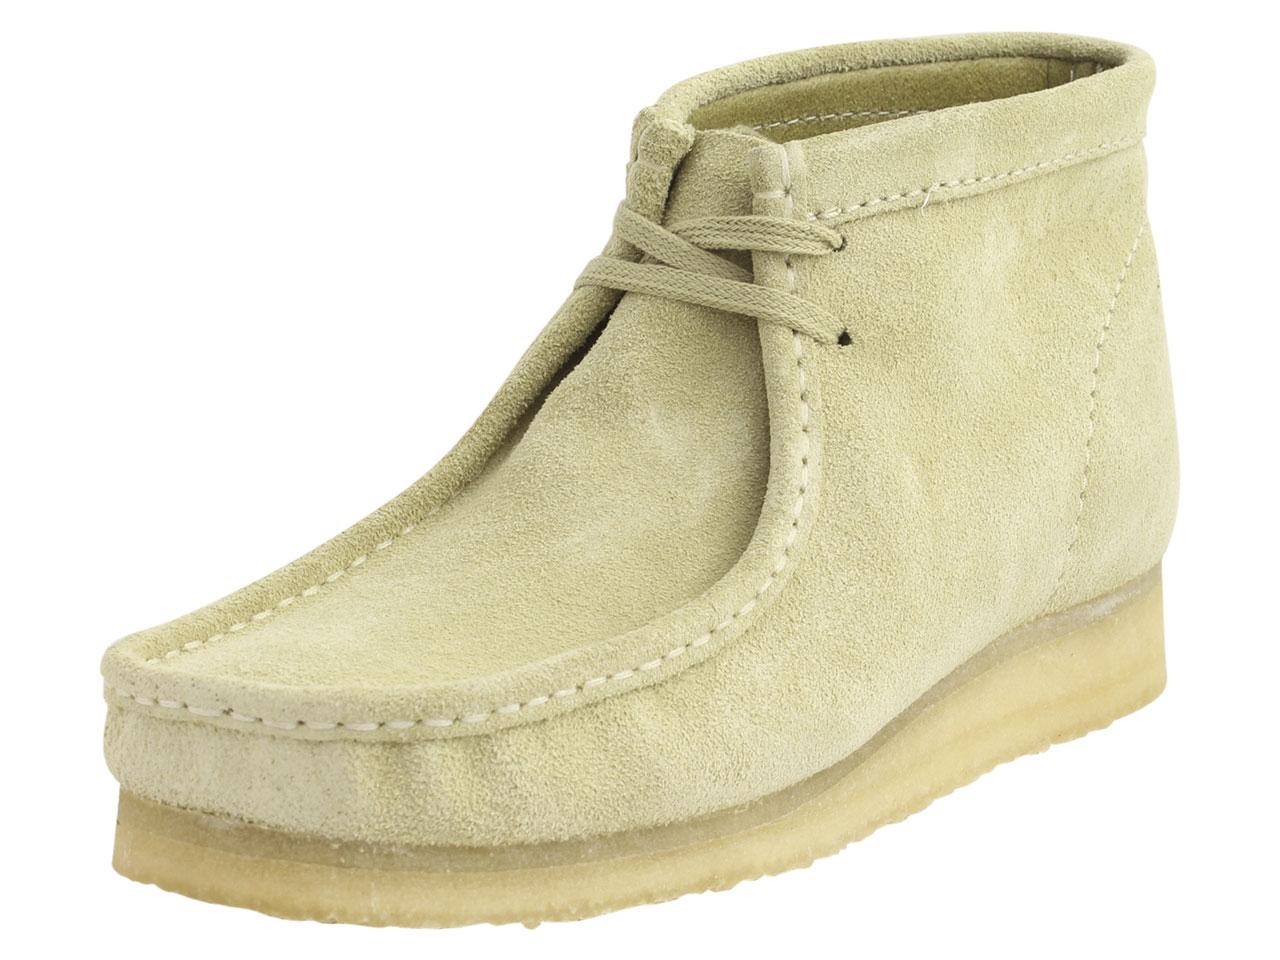 Clarks Originals Men's Wallabee Chukka Boots Shoes - Maple Suede 26133283 - 9.5 D(M) US